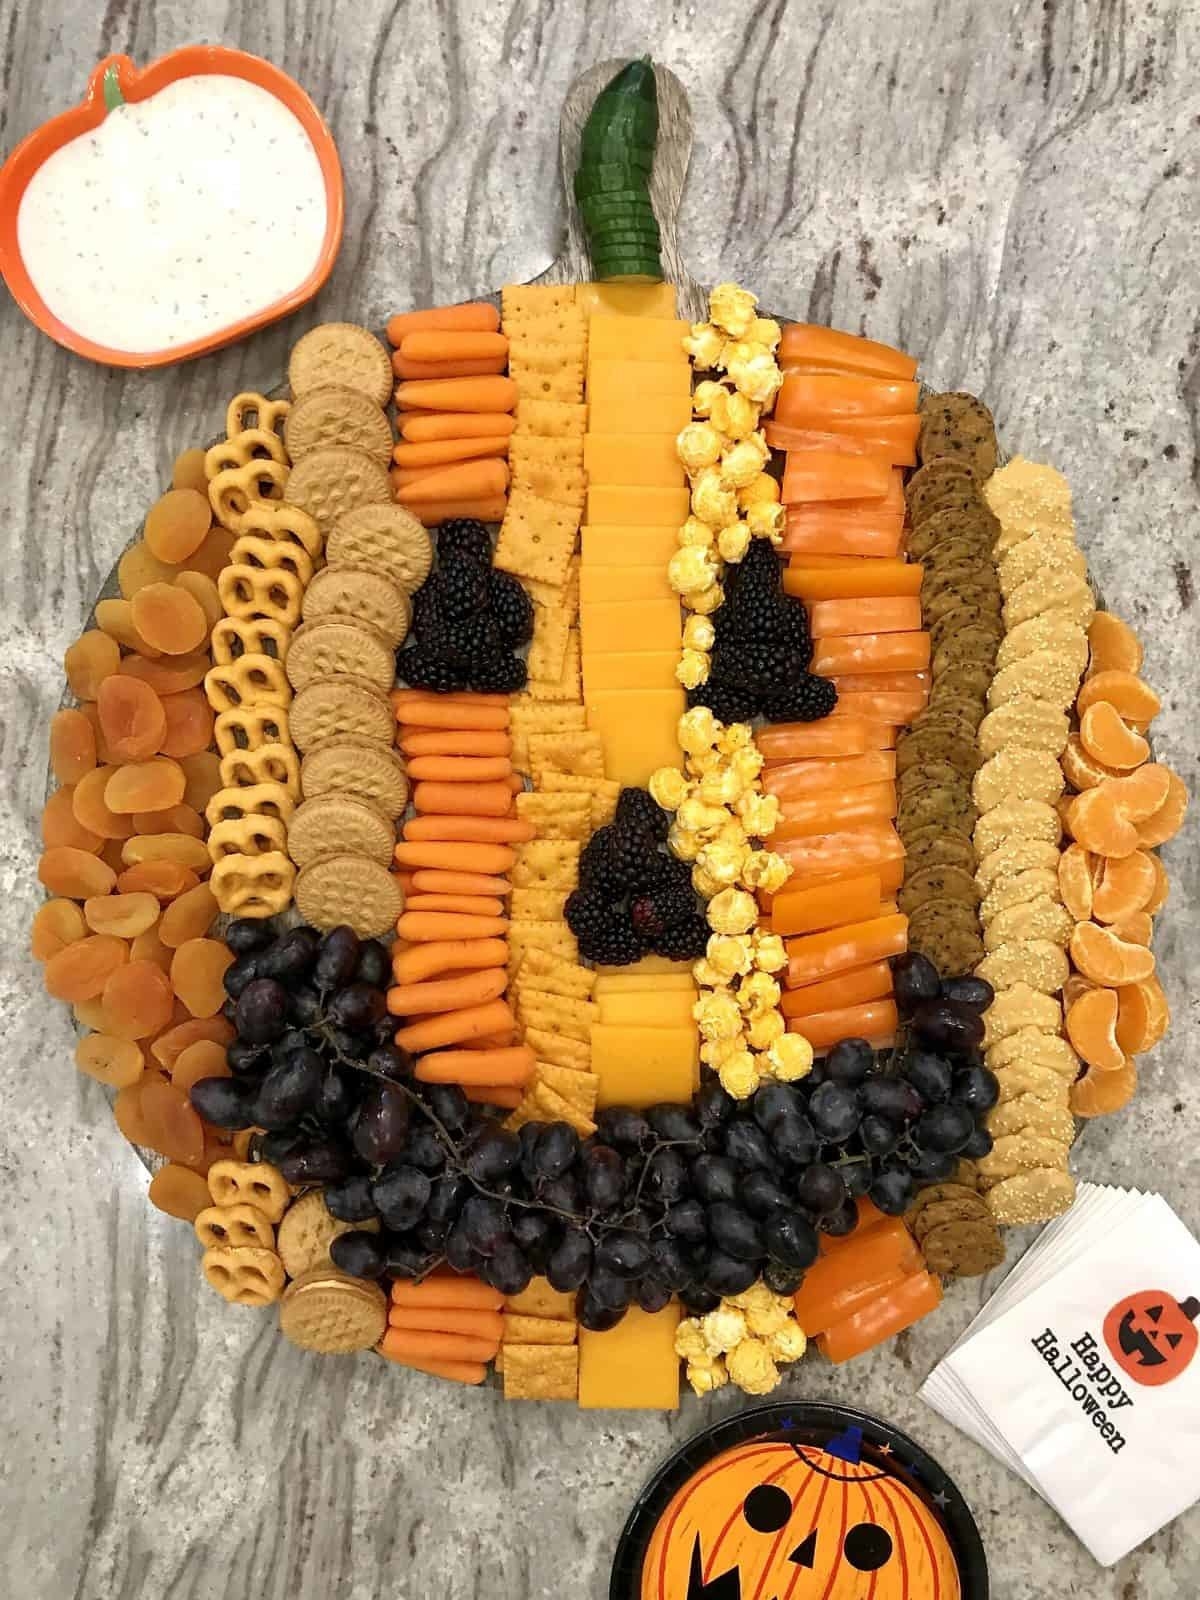 A board of snacks shaped into a pumpkin.